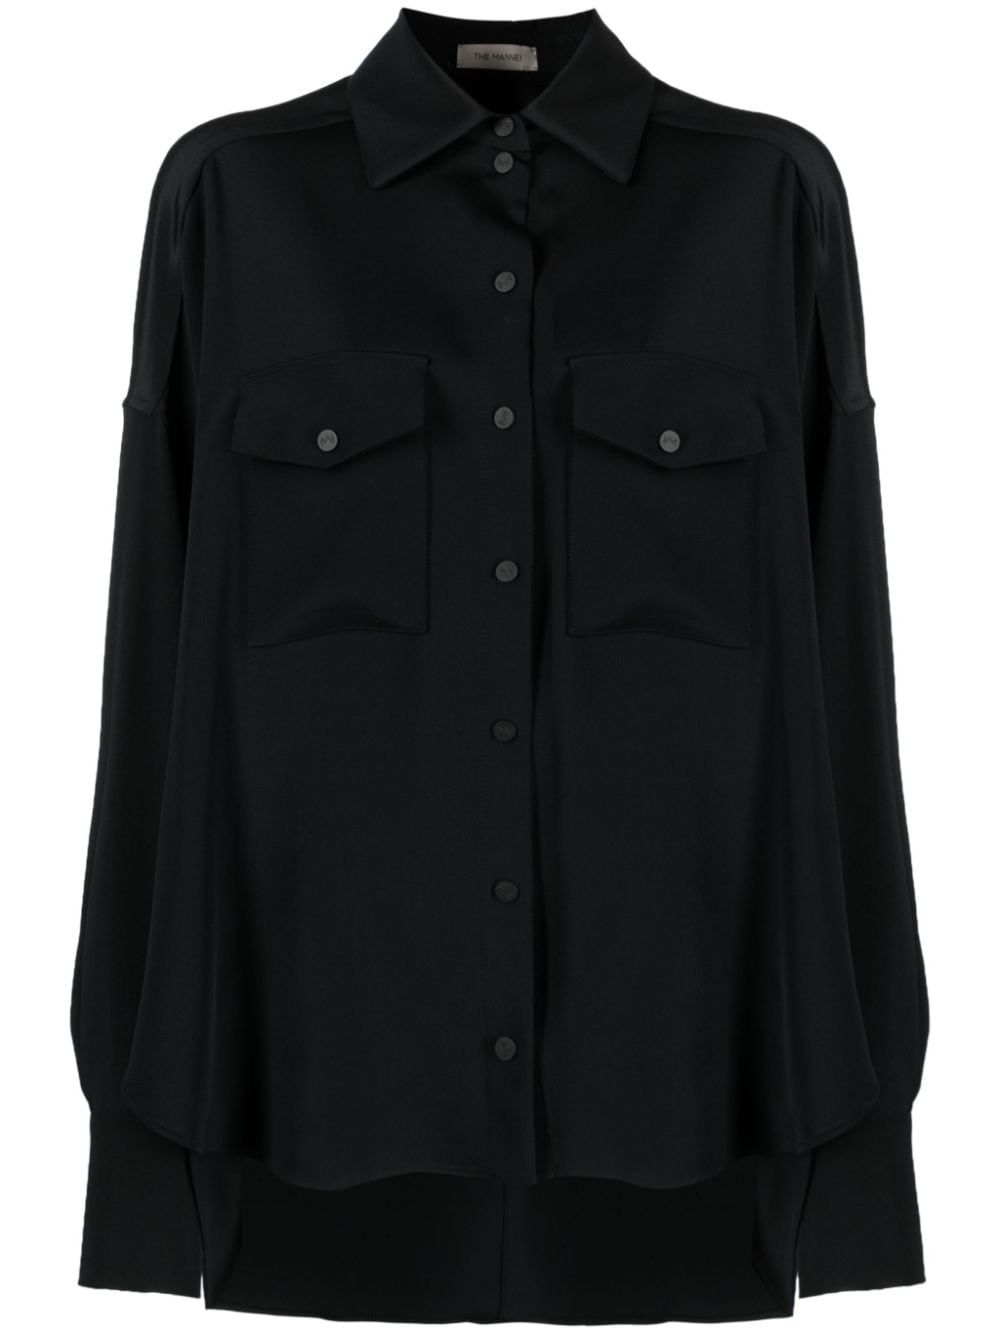 The Mannei Pf23tm Bilbao Shirt 0 Black